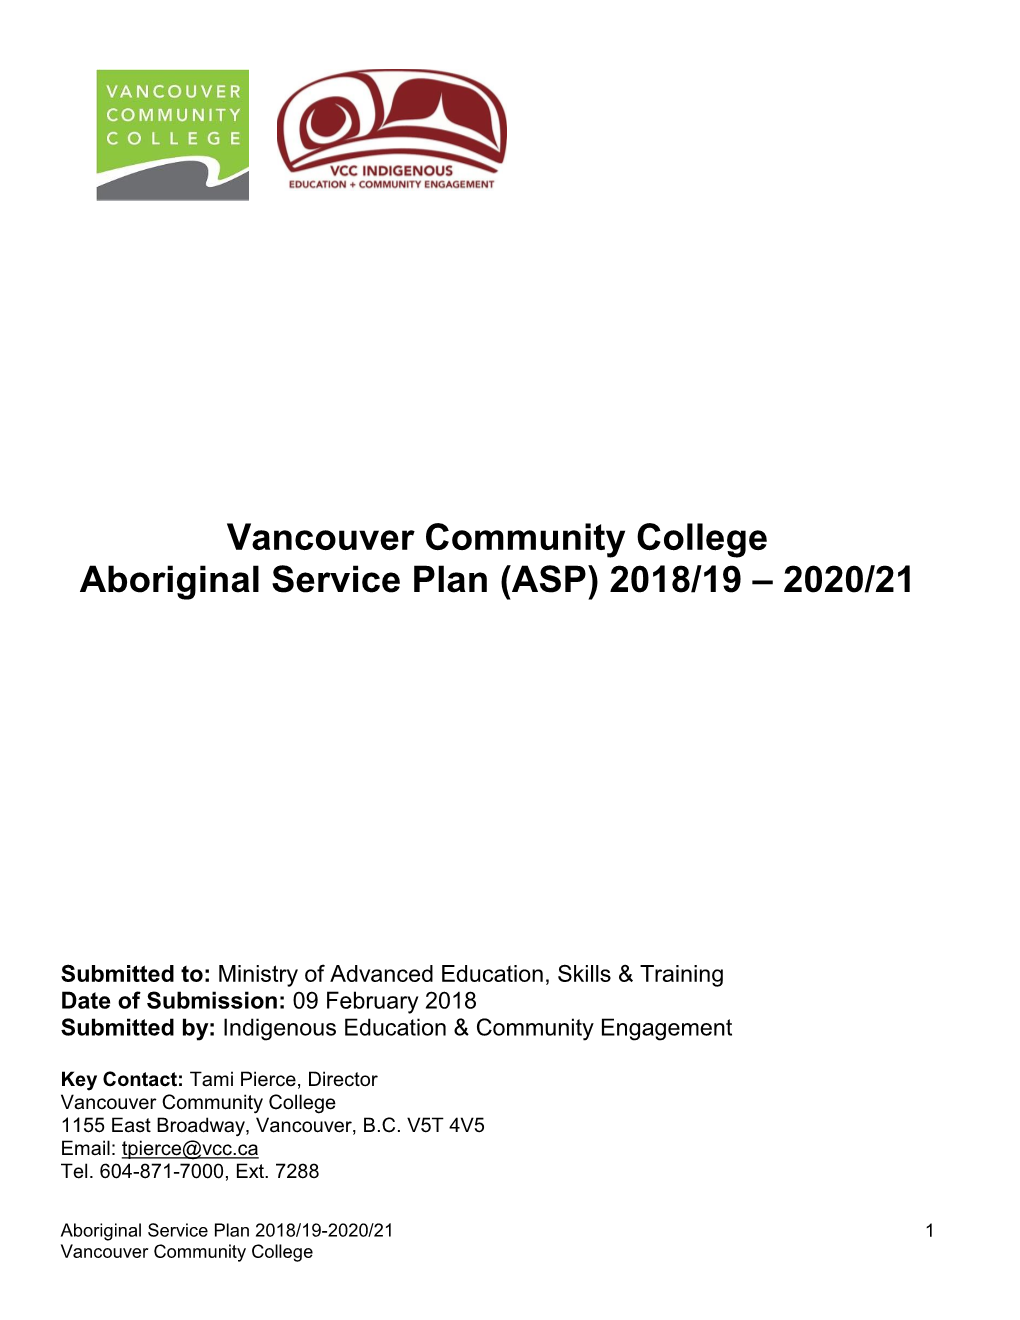 Vancouver Community College Aboriginal Service Plan (ASP) 2018/19 – 2020/21